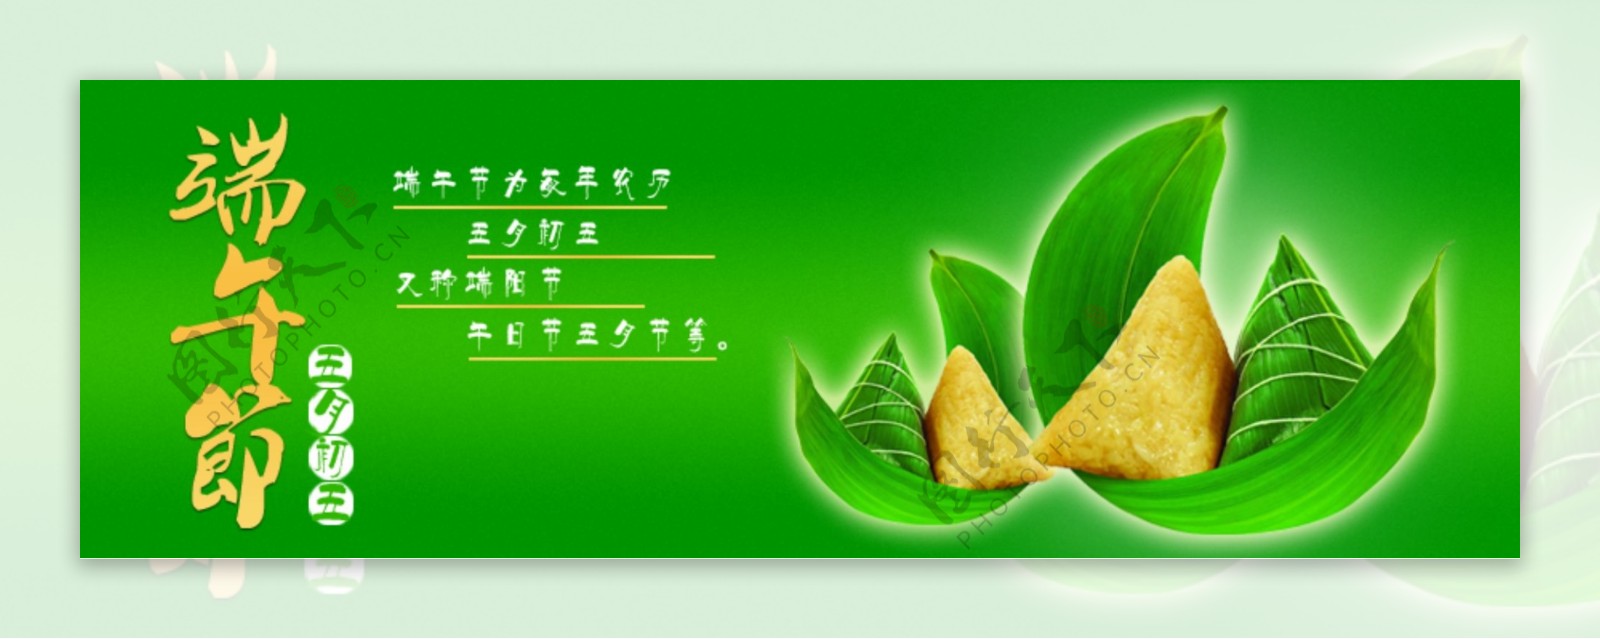 端午节banner图片